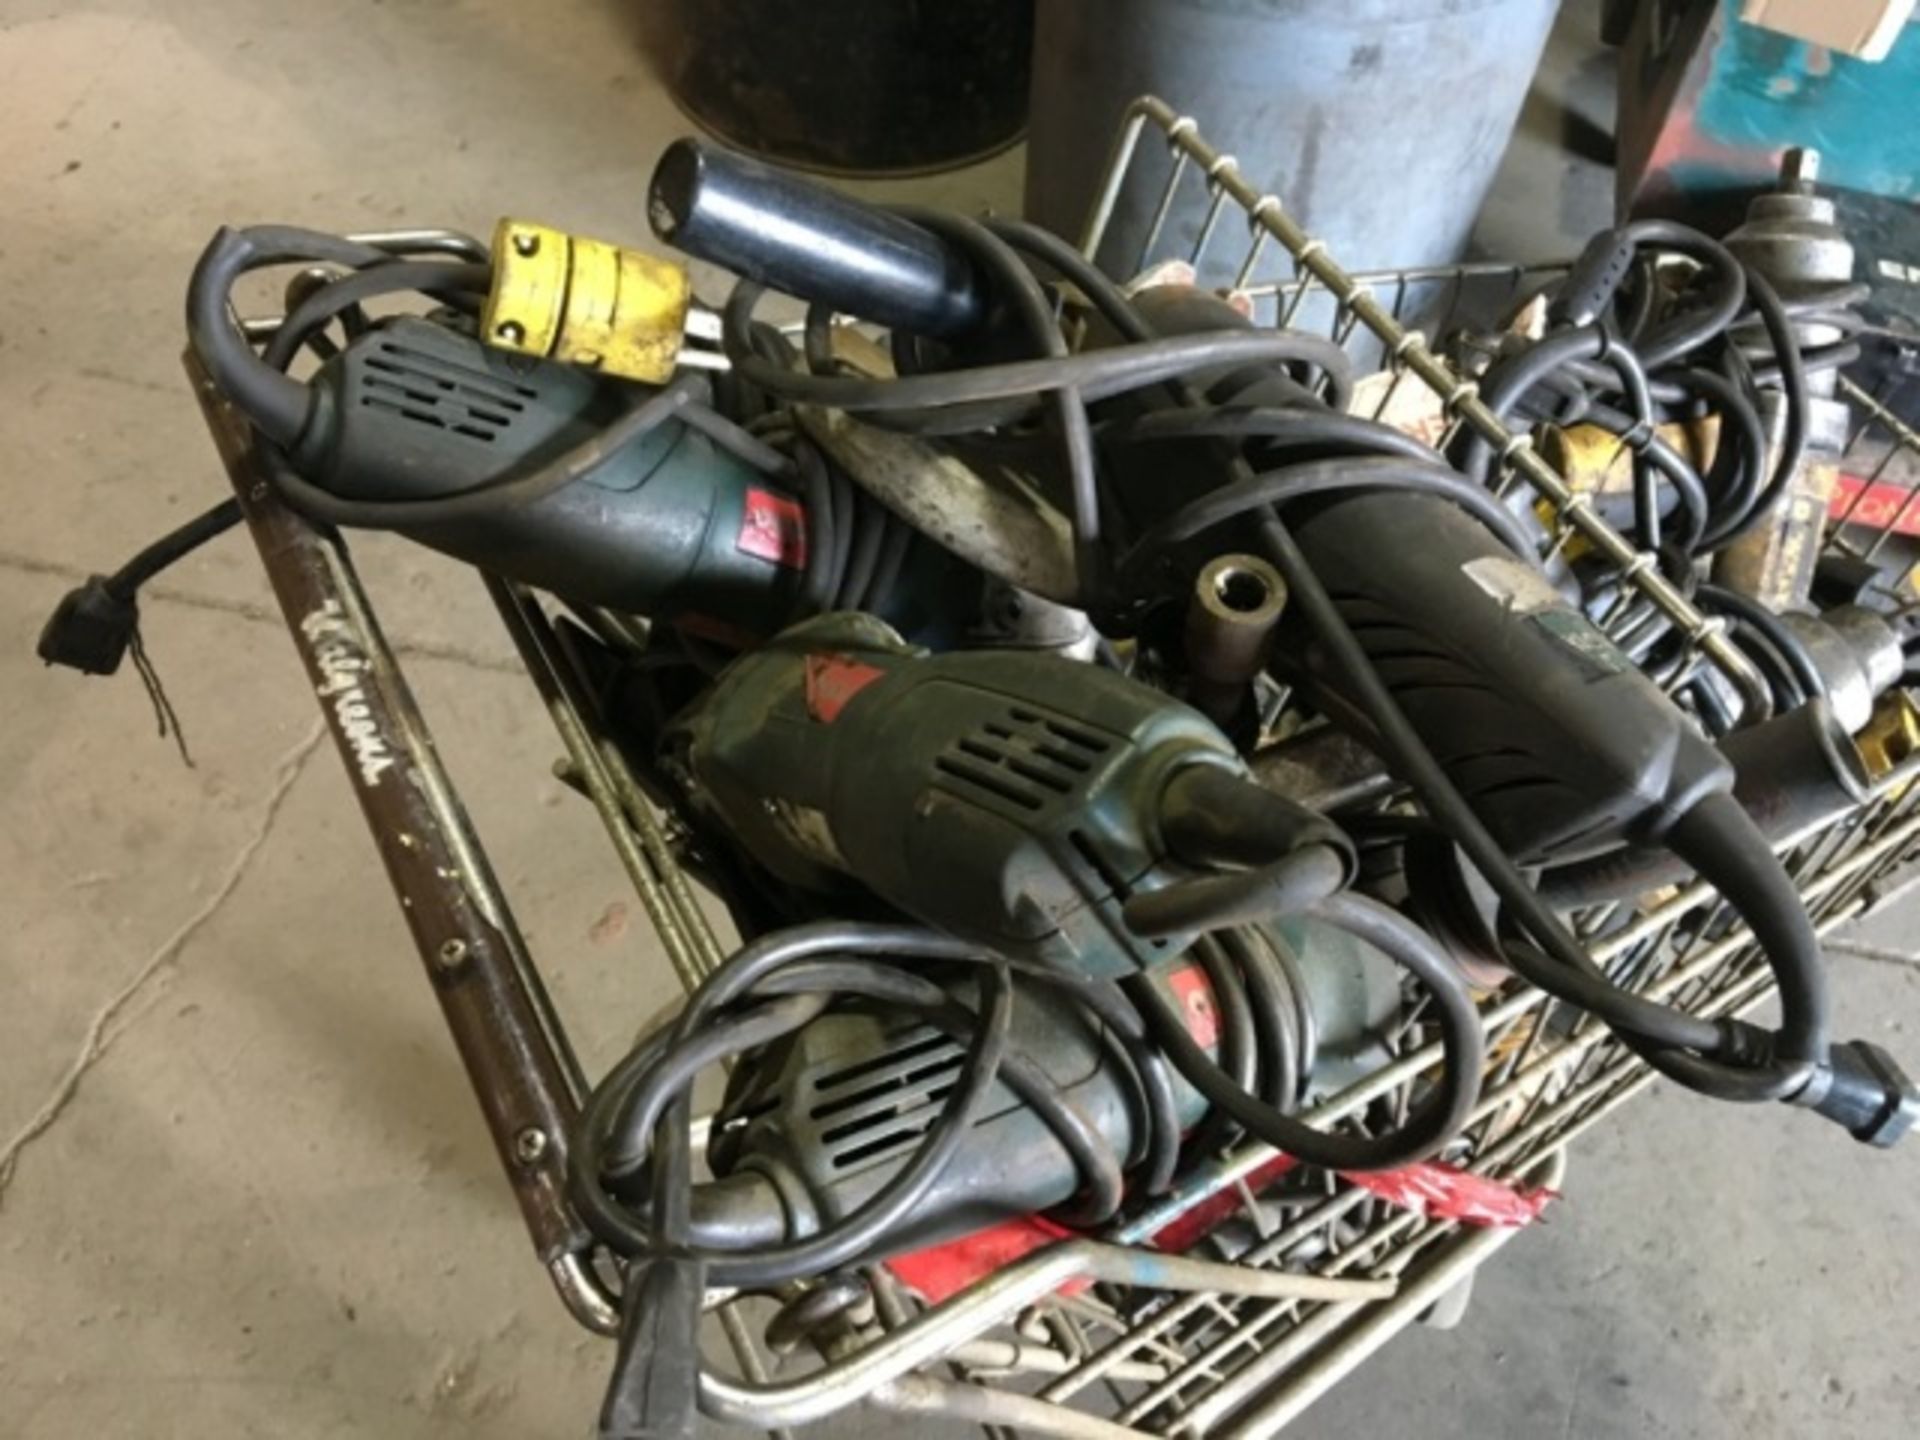 Cart full of power tools - repair needed - Image 3 of 3